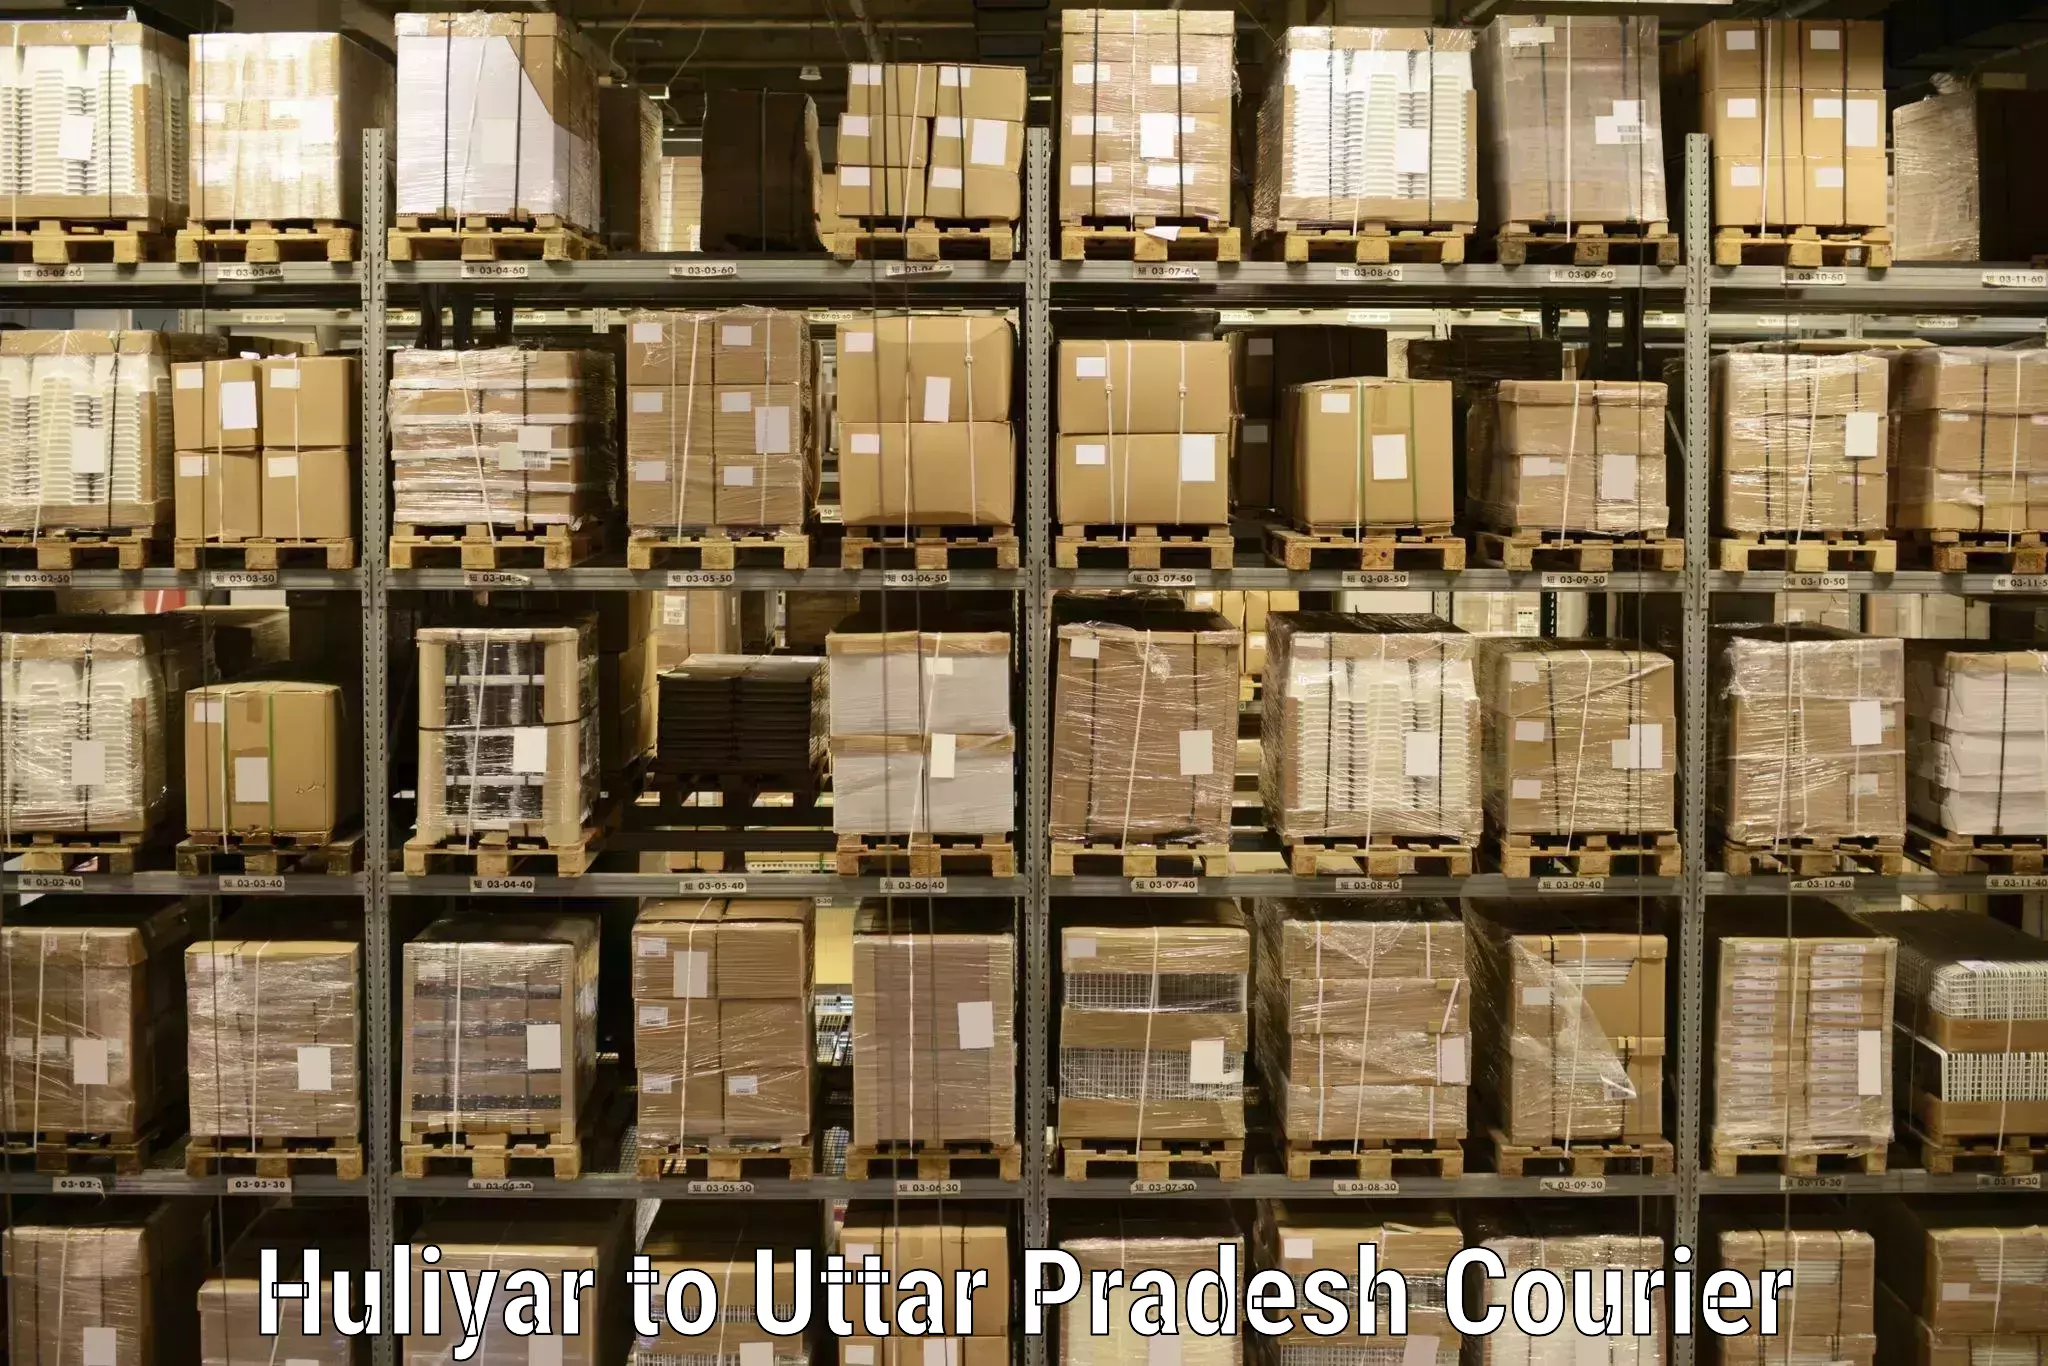 Modern delivery technologies in Huliyar to Aligarh Muslim University